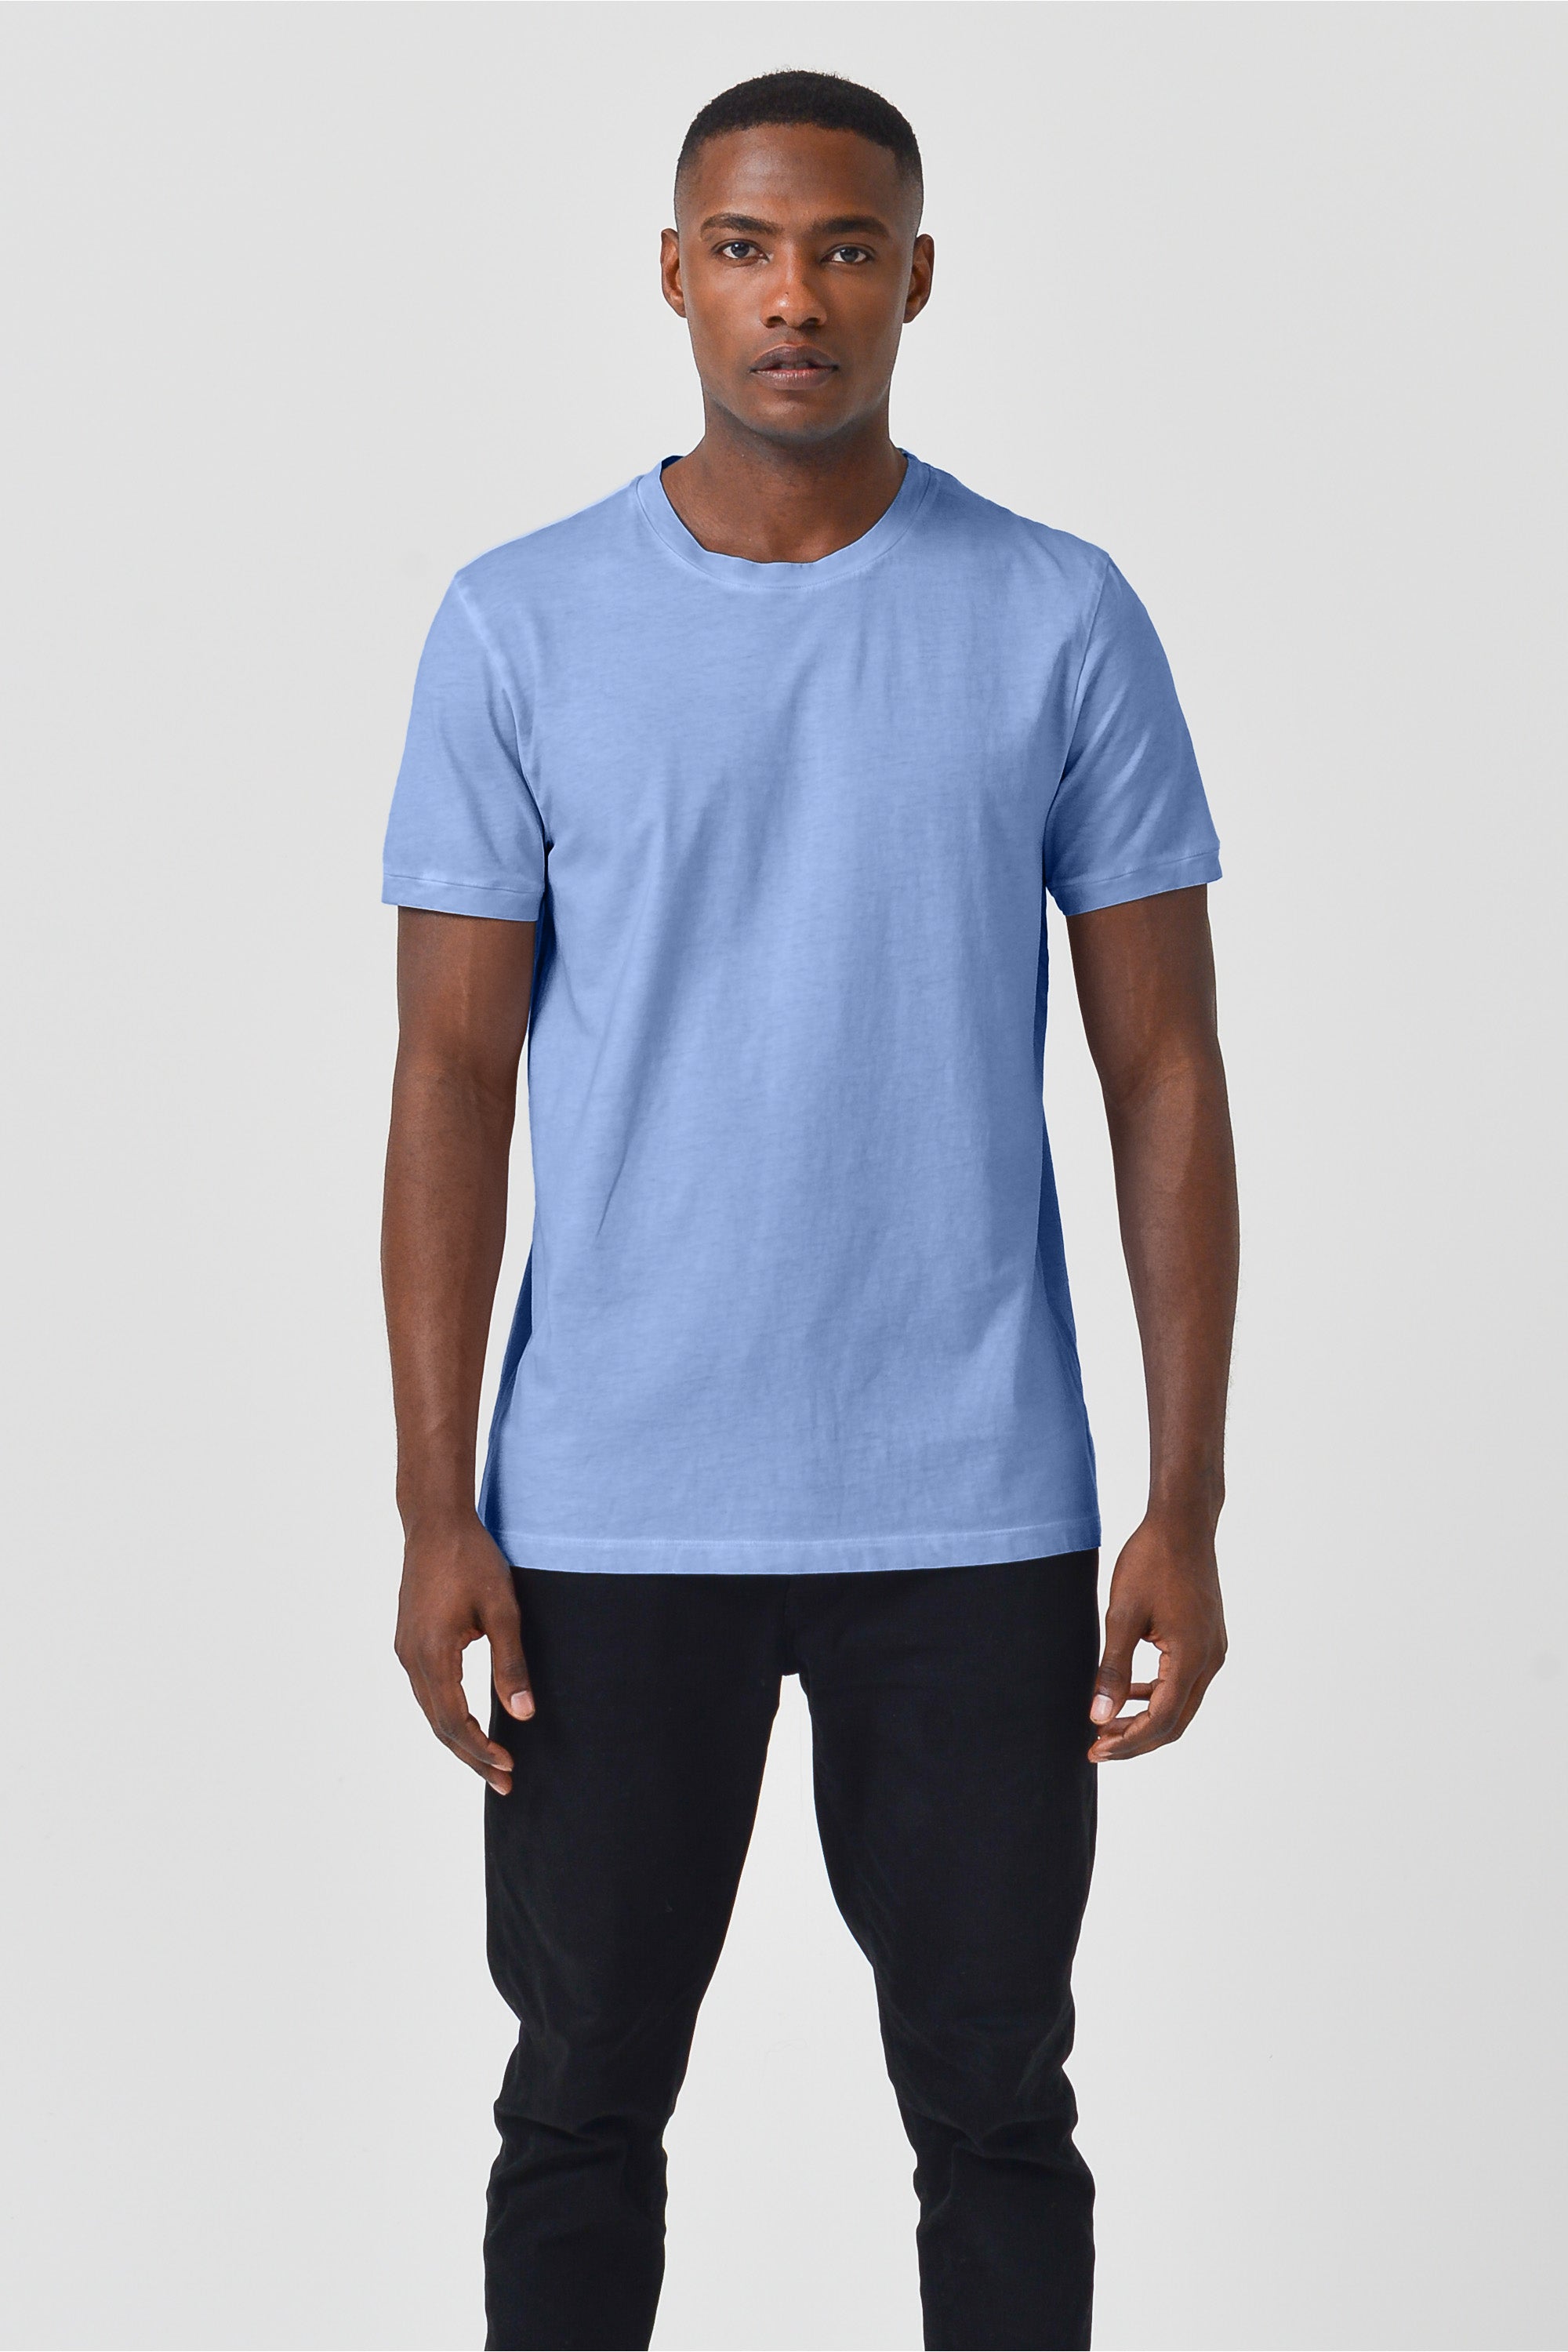 Smart Casual Cotton T-Shirt - Bay